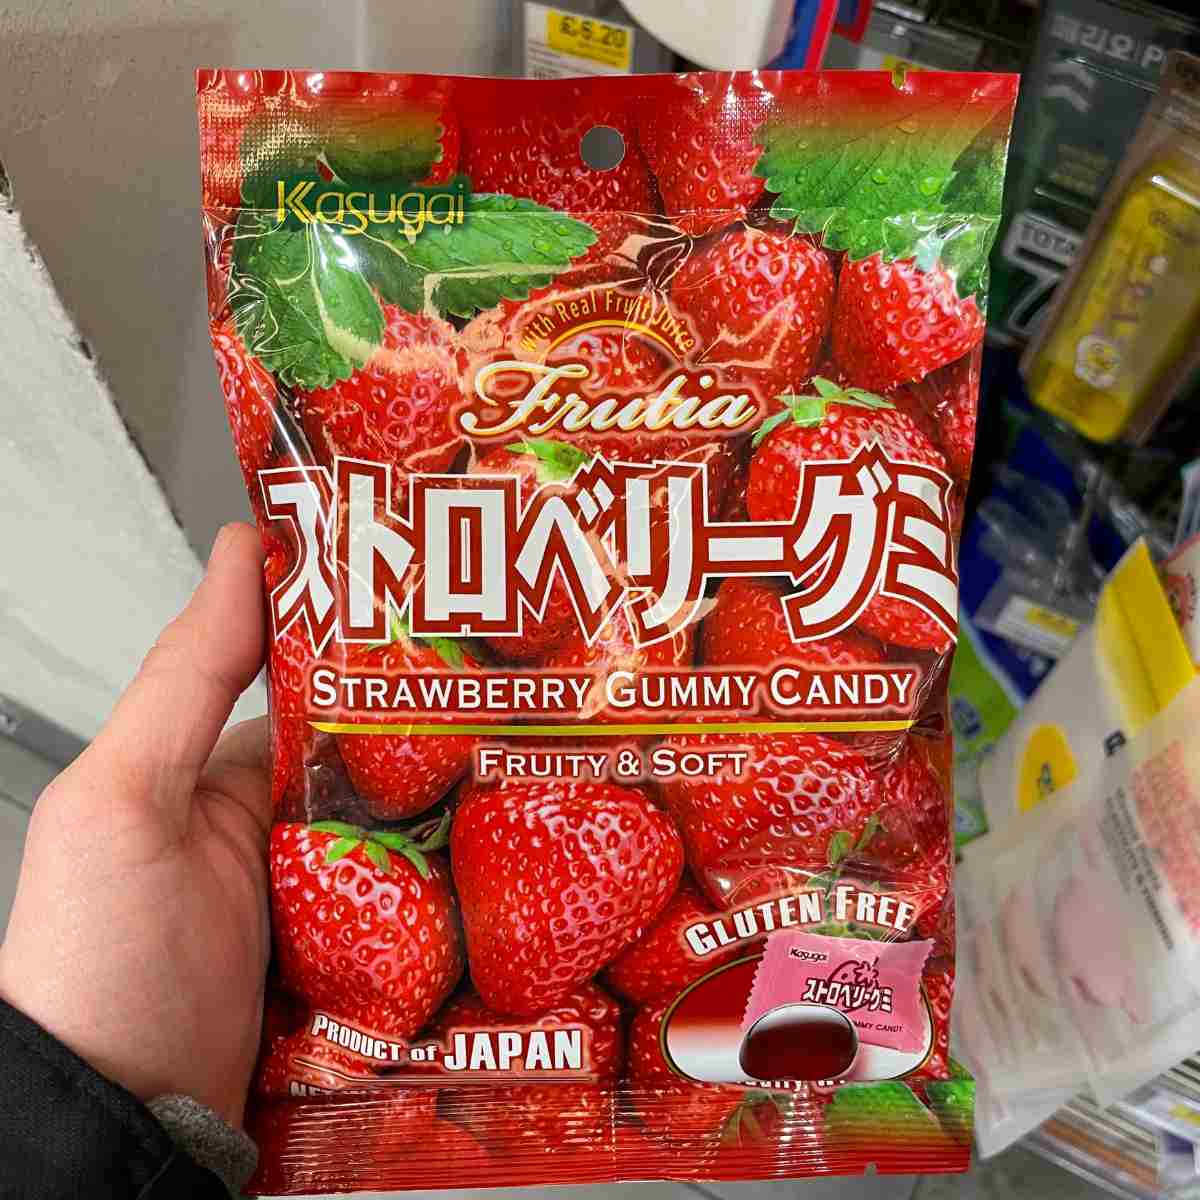 Kasugai strawberry gummy